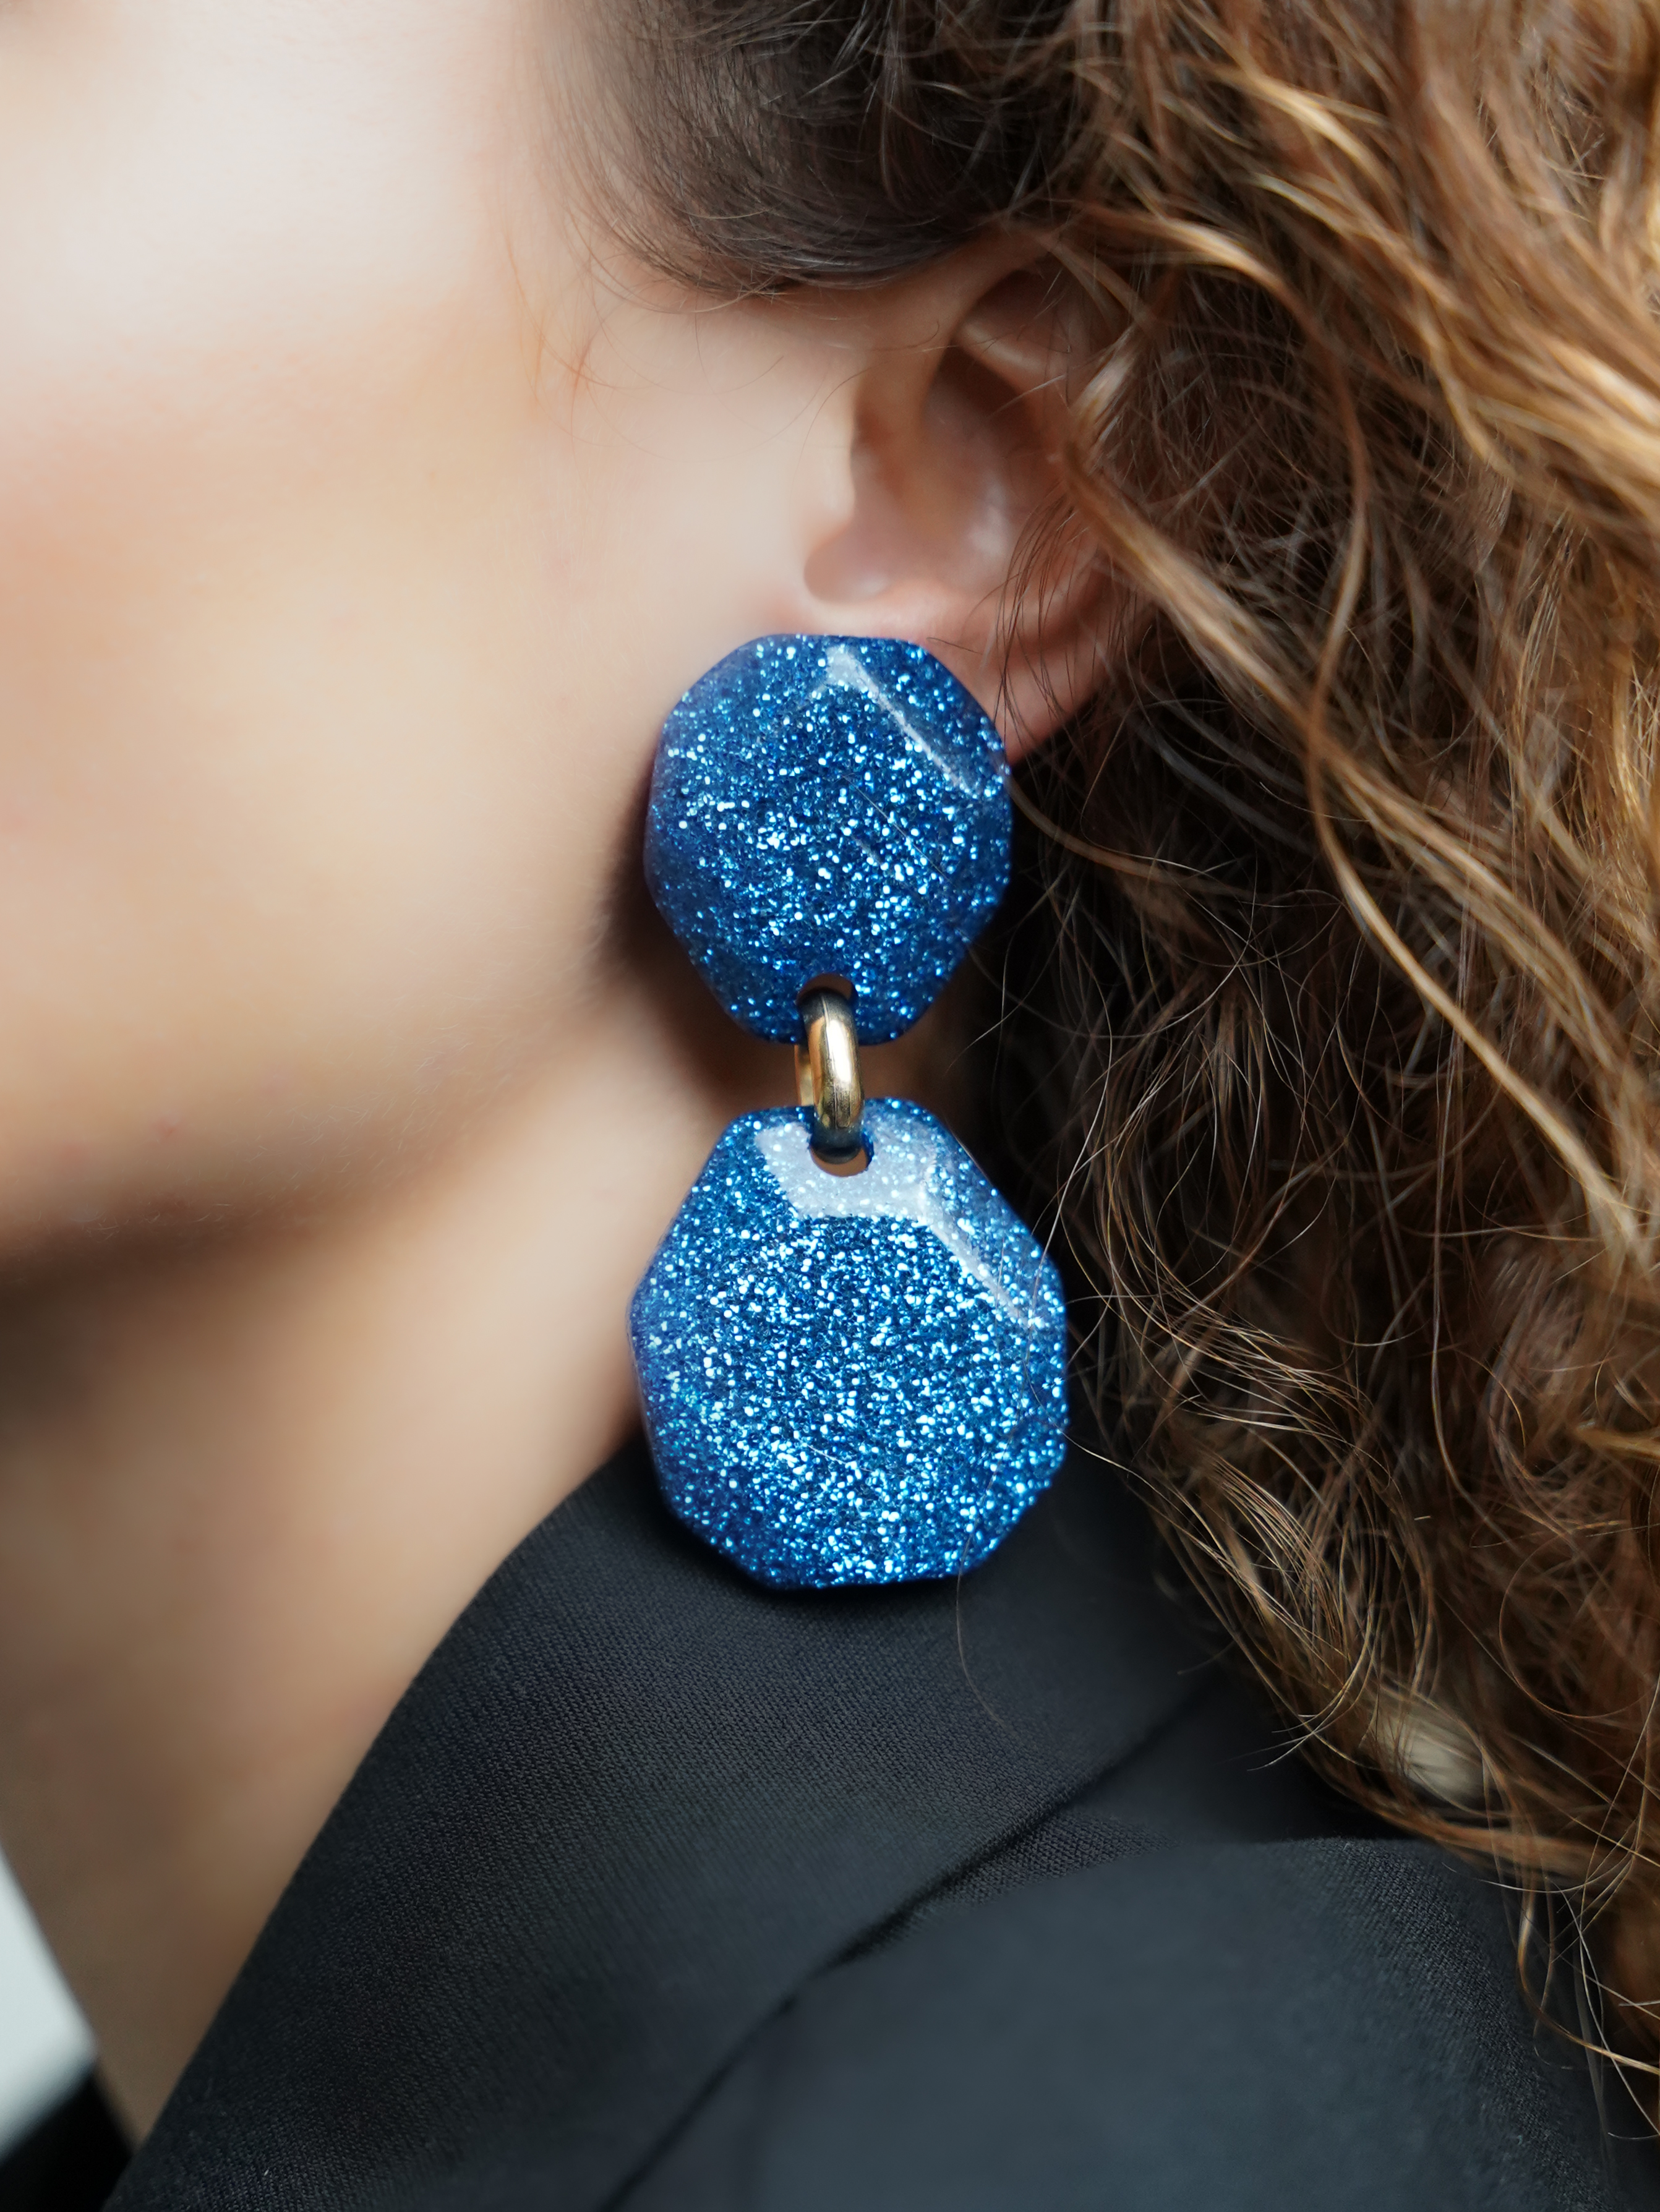 Blue Glitter Earrings Zora Double Rock Deluxe Mlott-theme.productDescriptionPage.SEO.byTheBrand